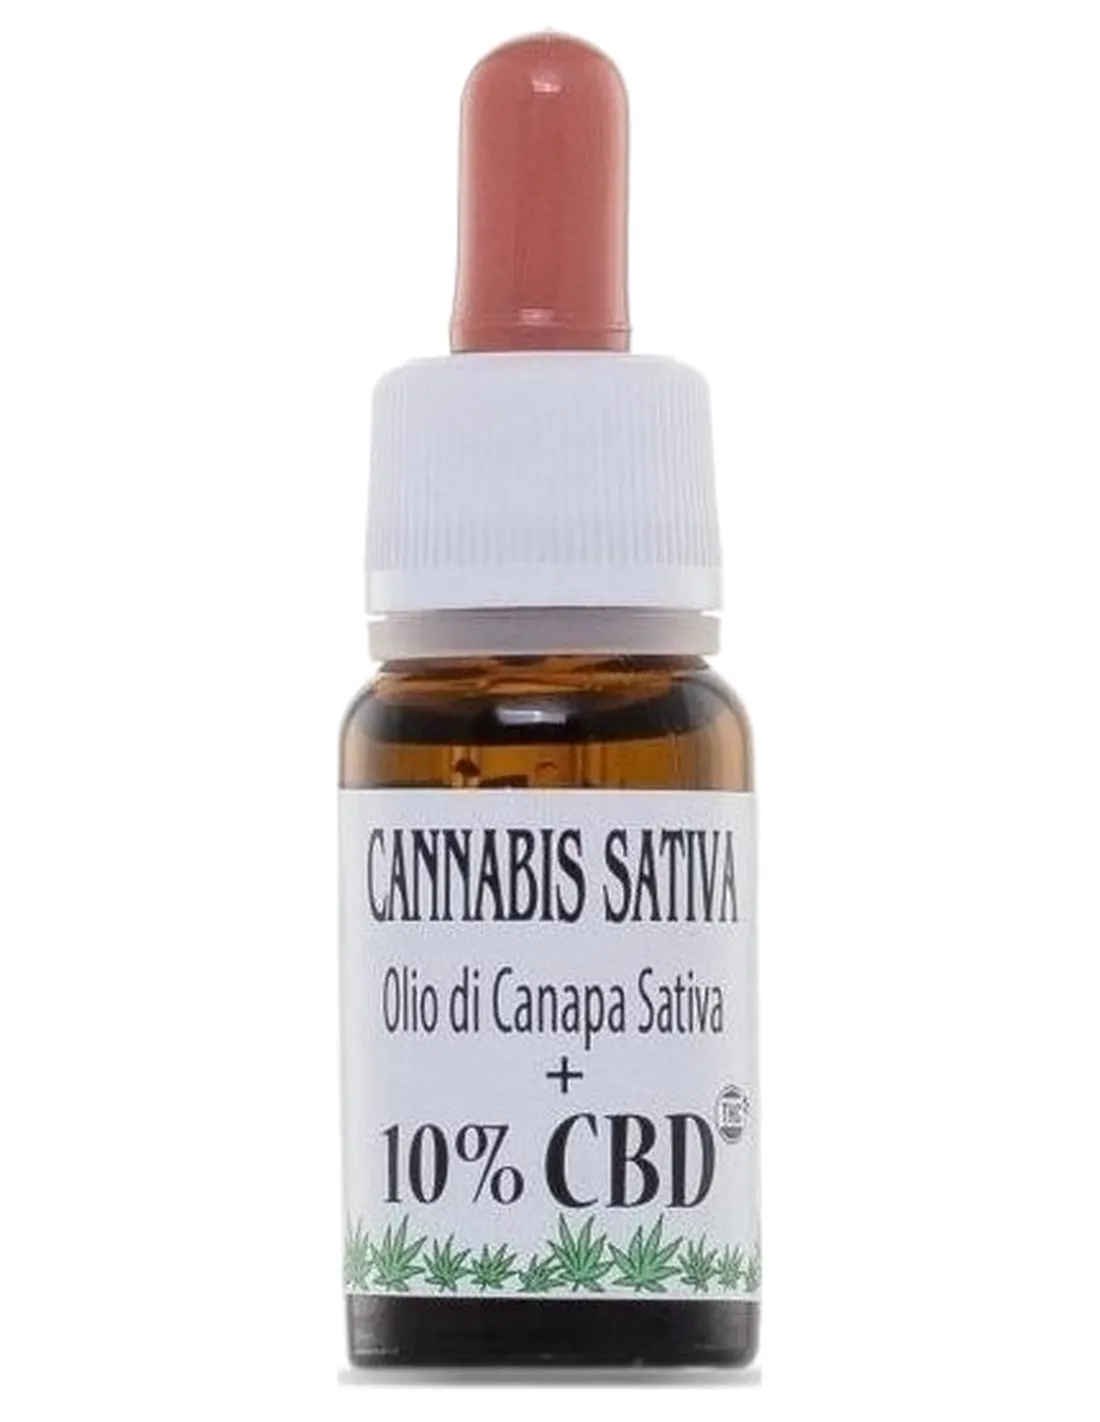 Dermapro Pets cannabis sativa olio + CBD 10%